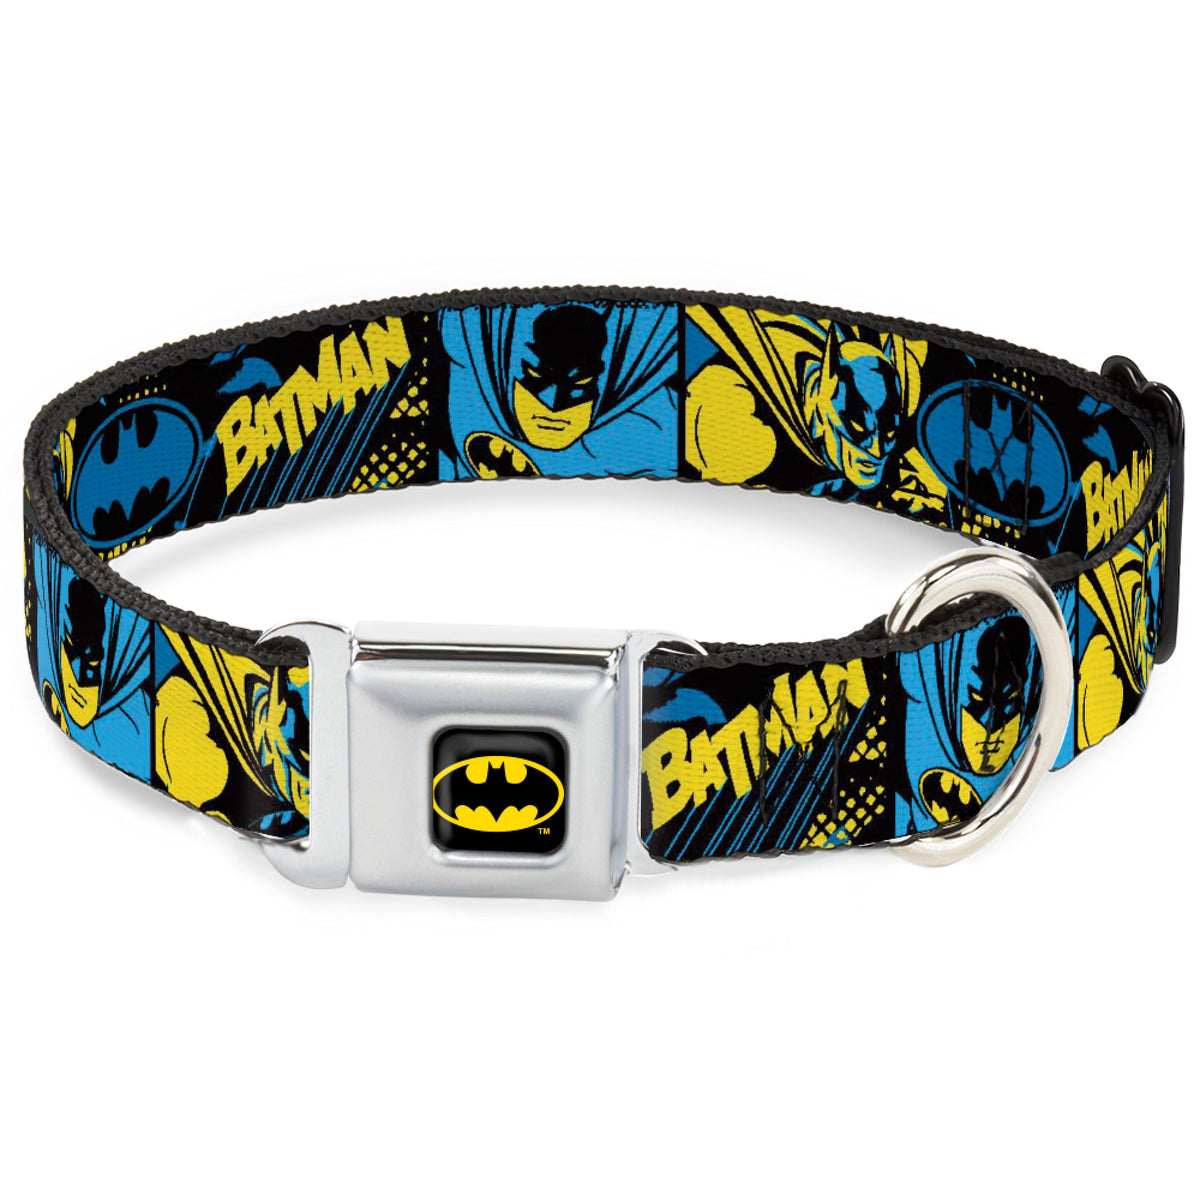 Batman Black/Yellow Seatbelt Buckle Collar - BATMAN Poses and Logo Collage Black/Blue/Yellow